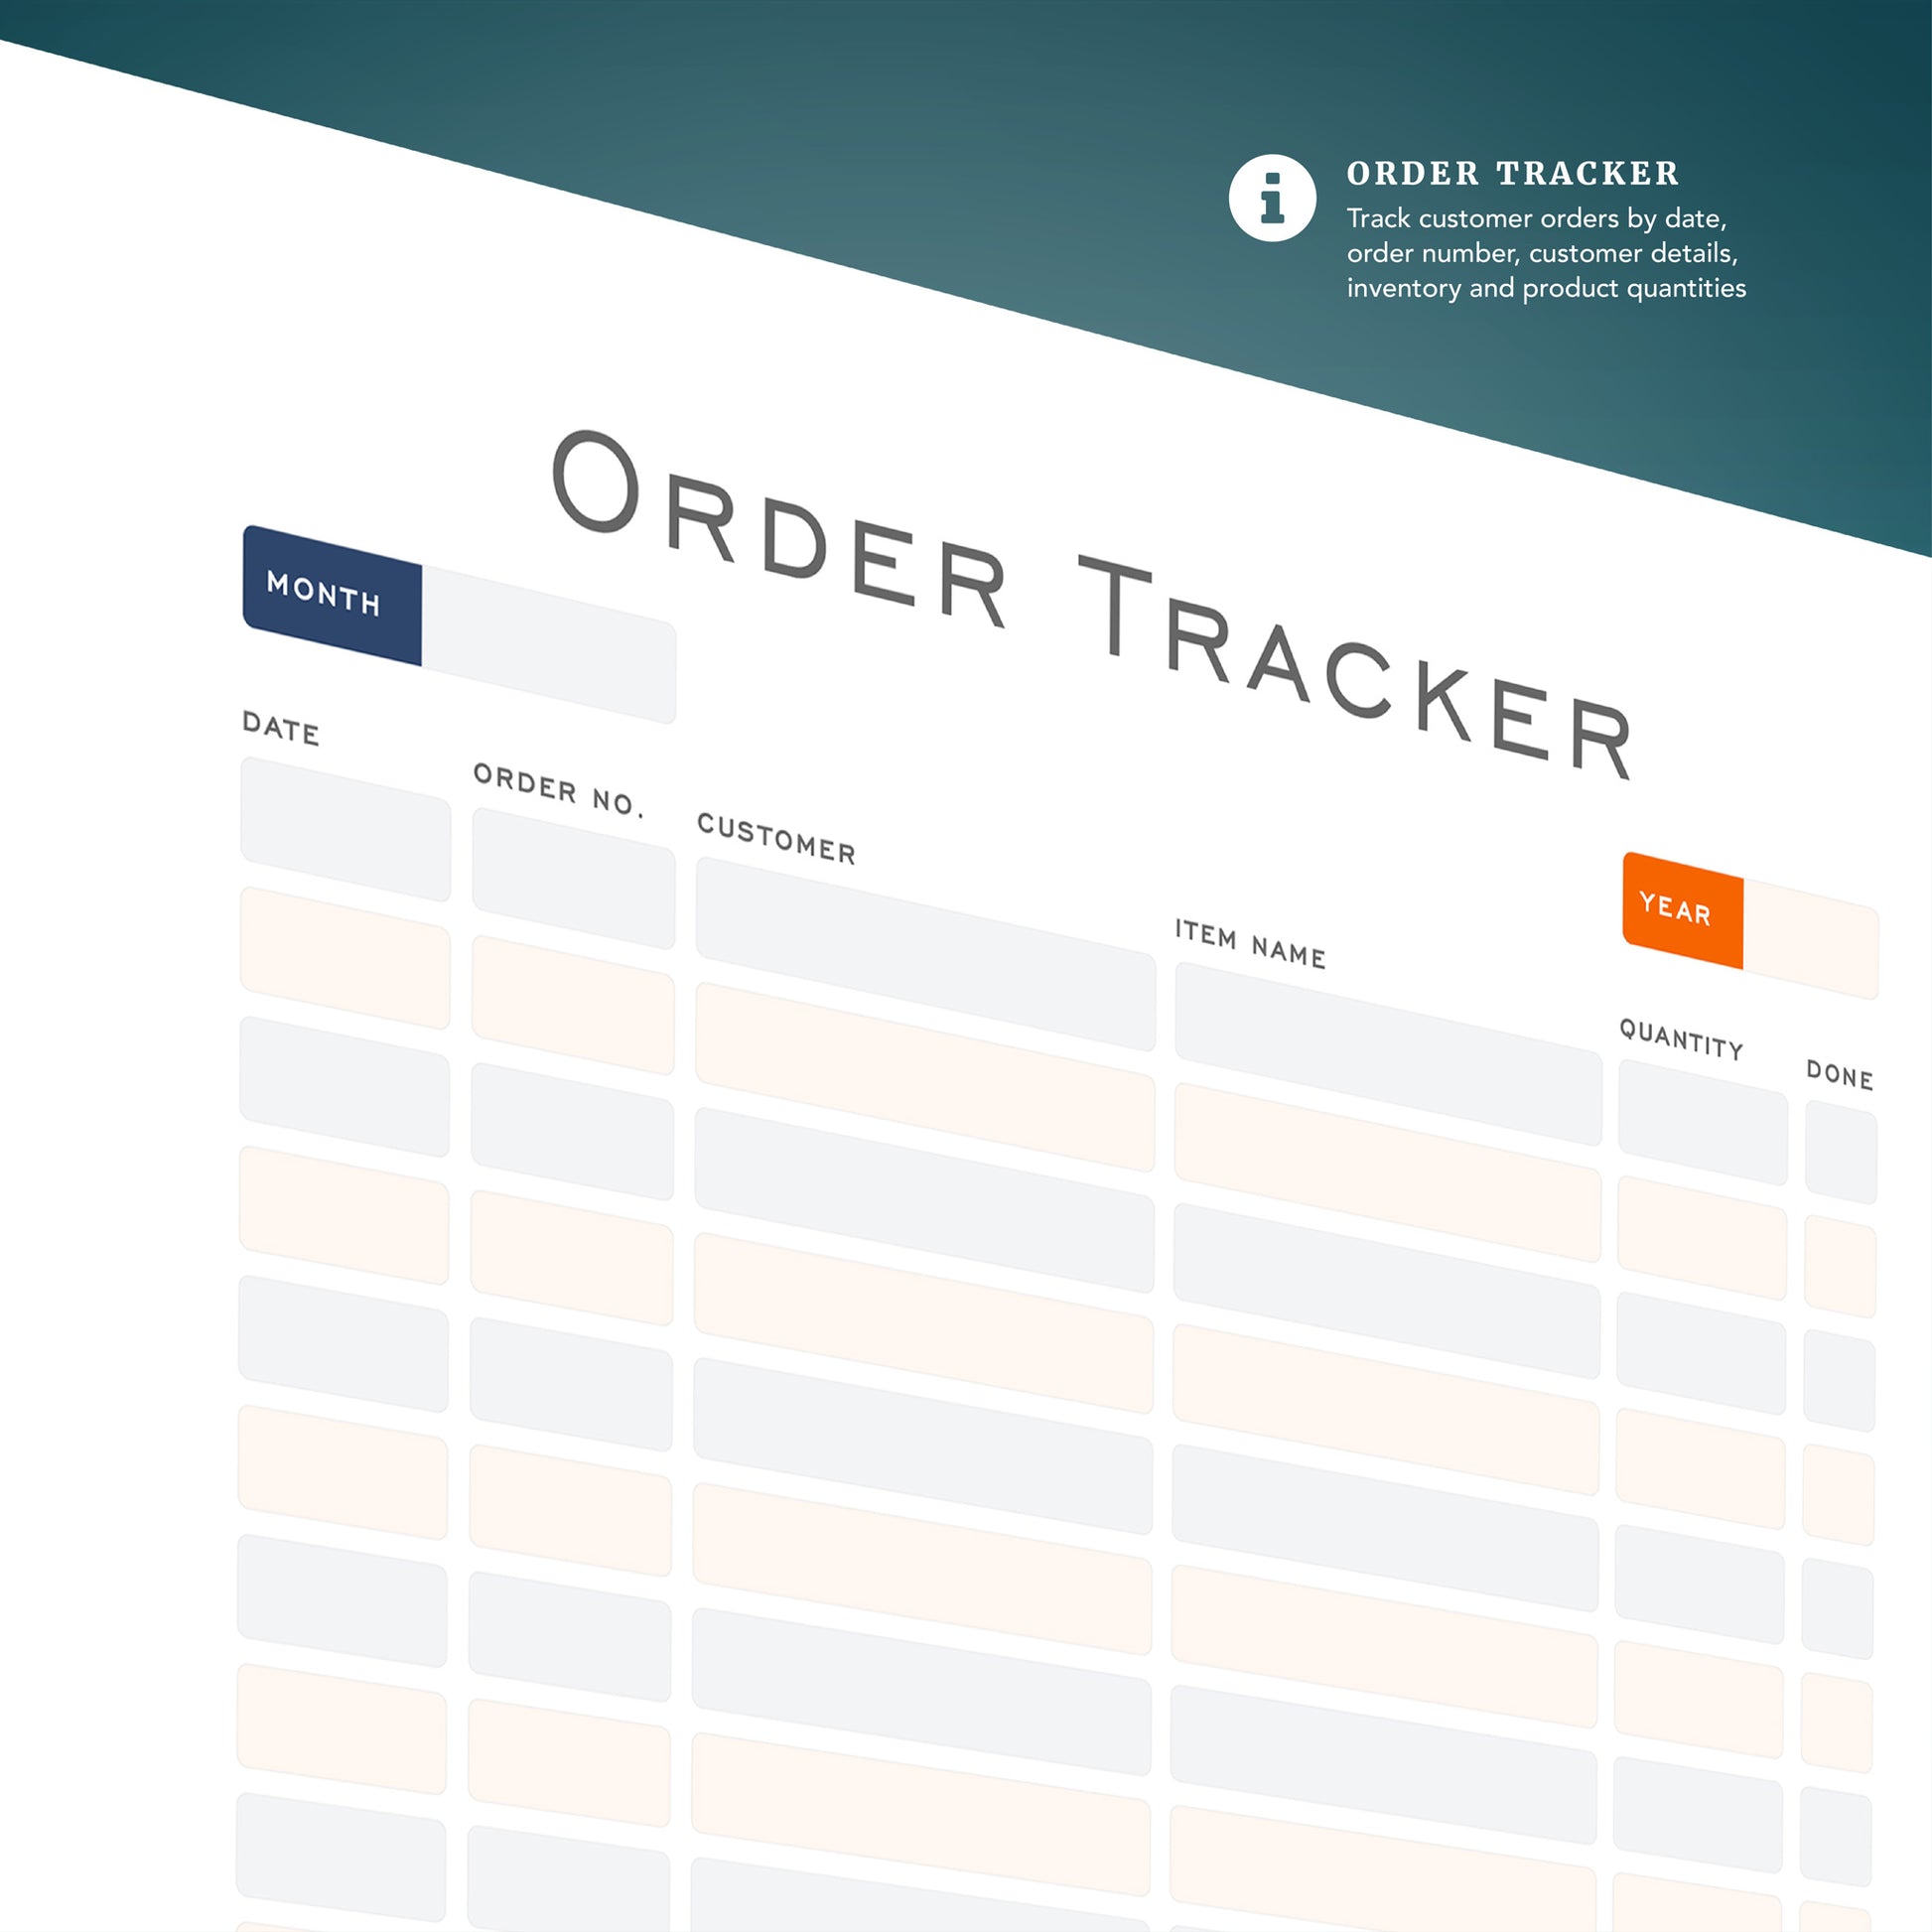 Planner Mum Small Business Order Tracker